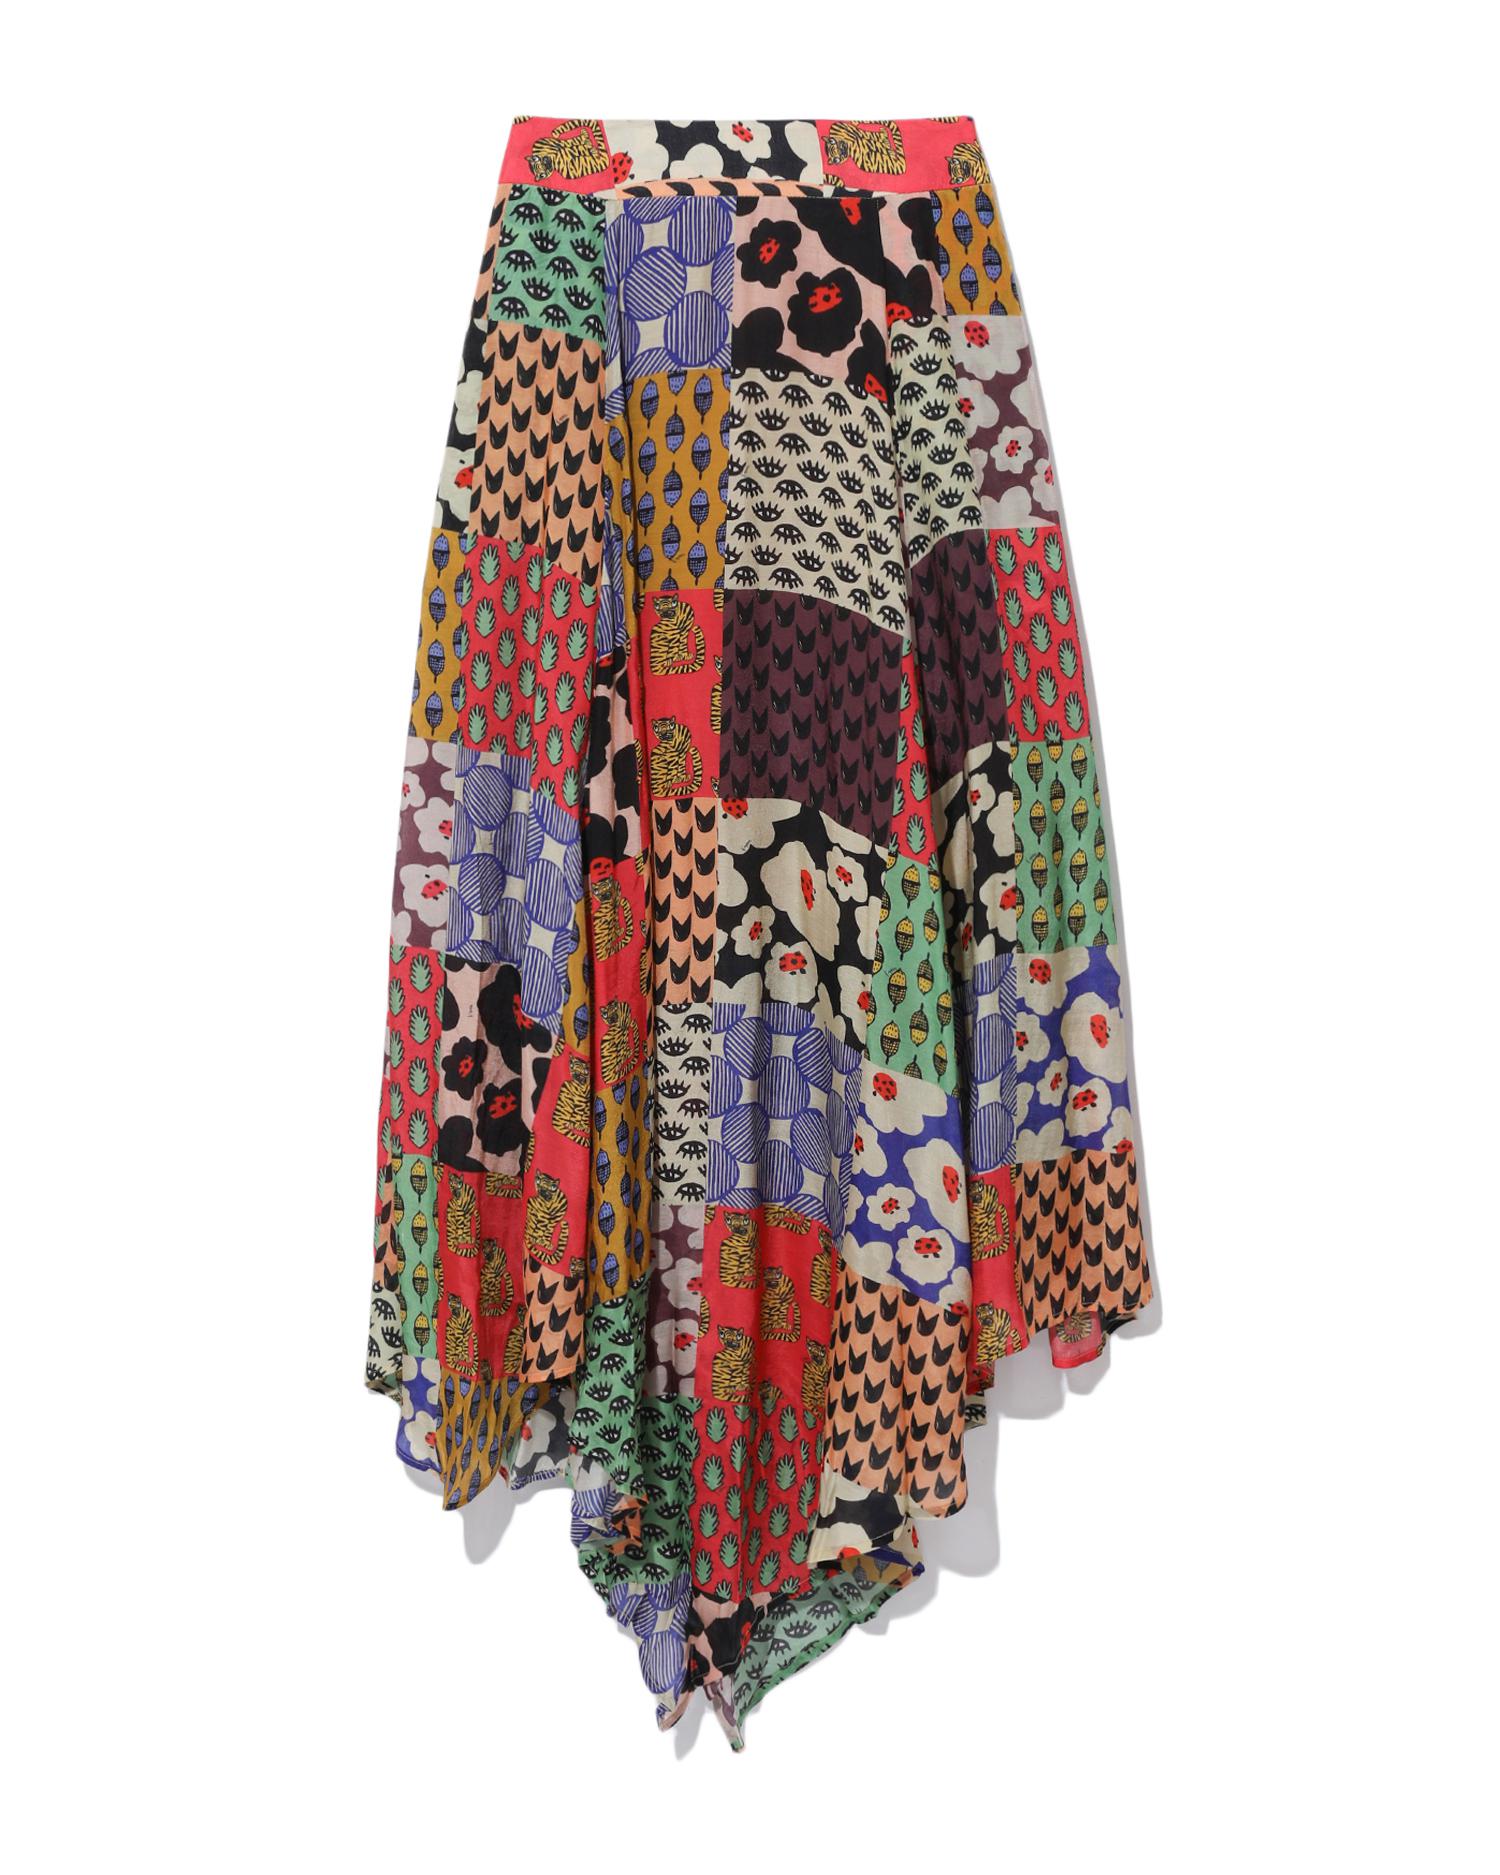 Patchwork drape skirt by DHRUV KAPOOR